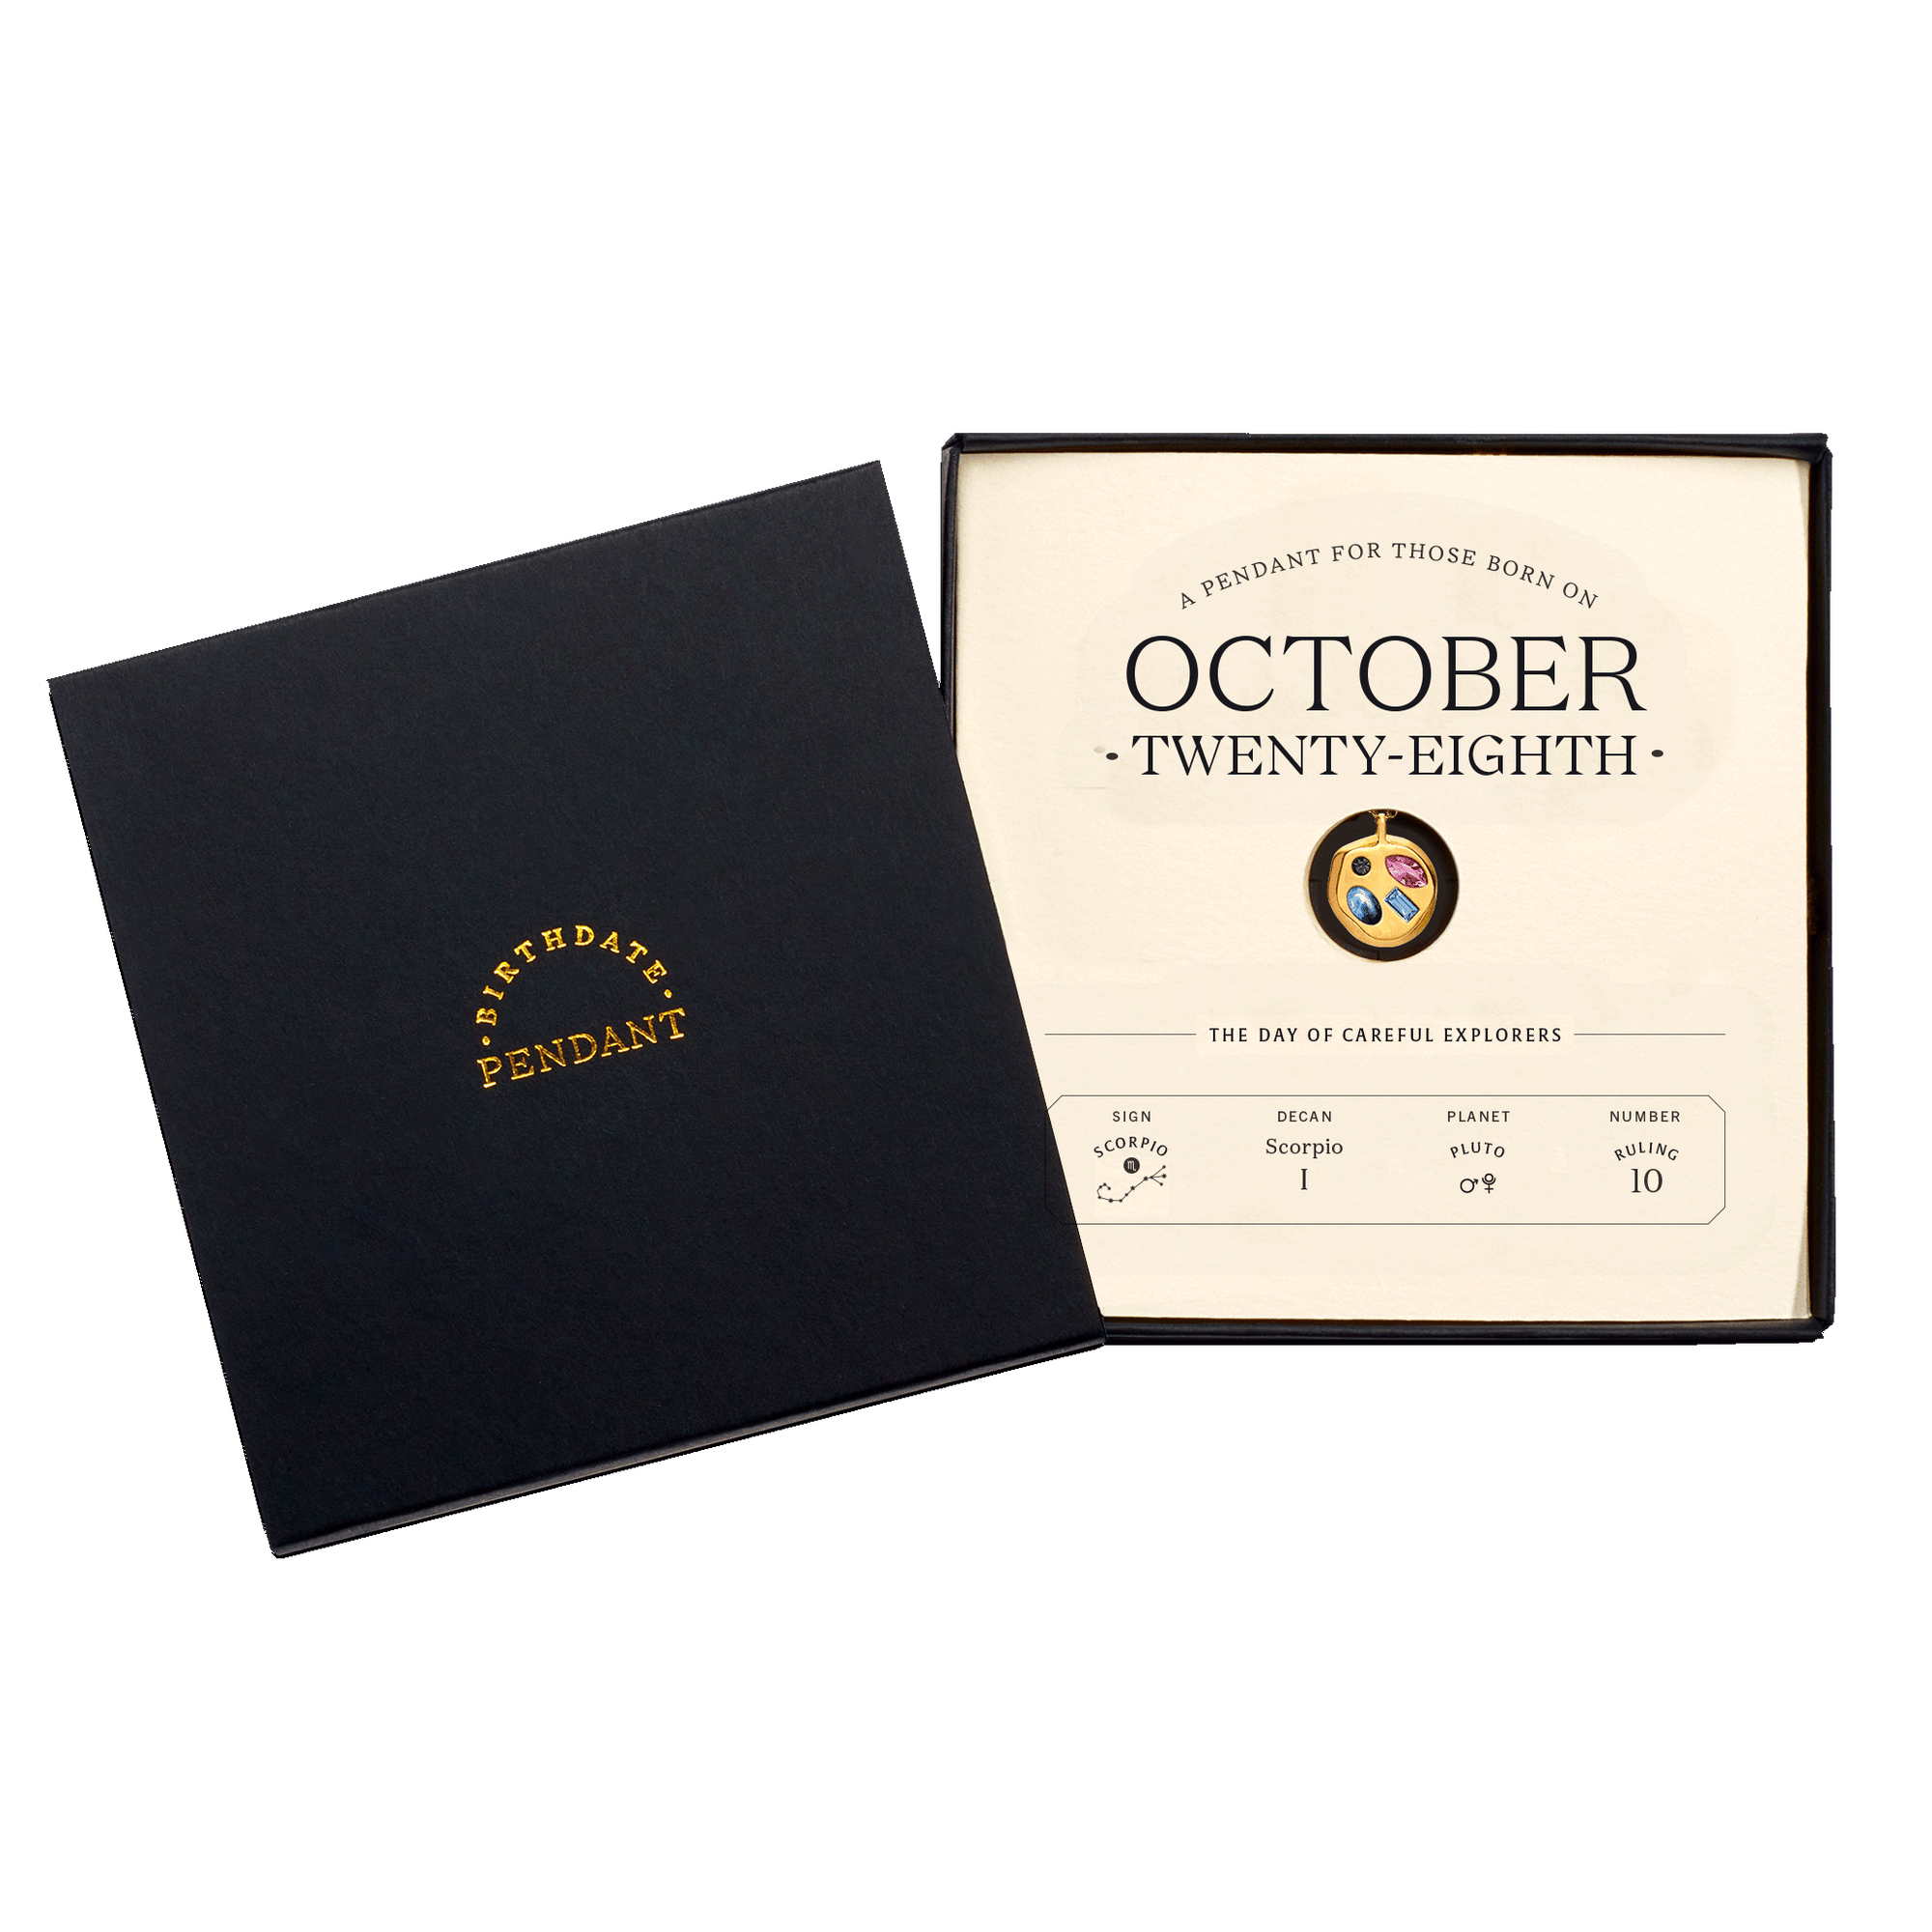 The October Twenty-Eighth Pendant inside its box